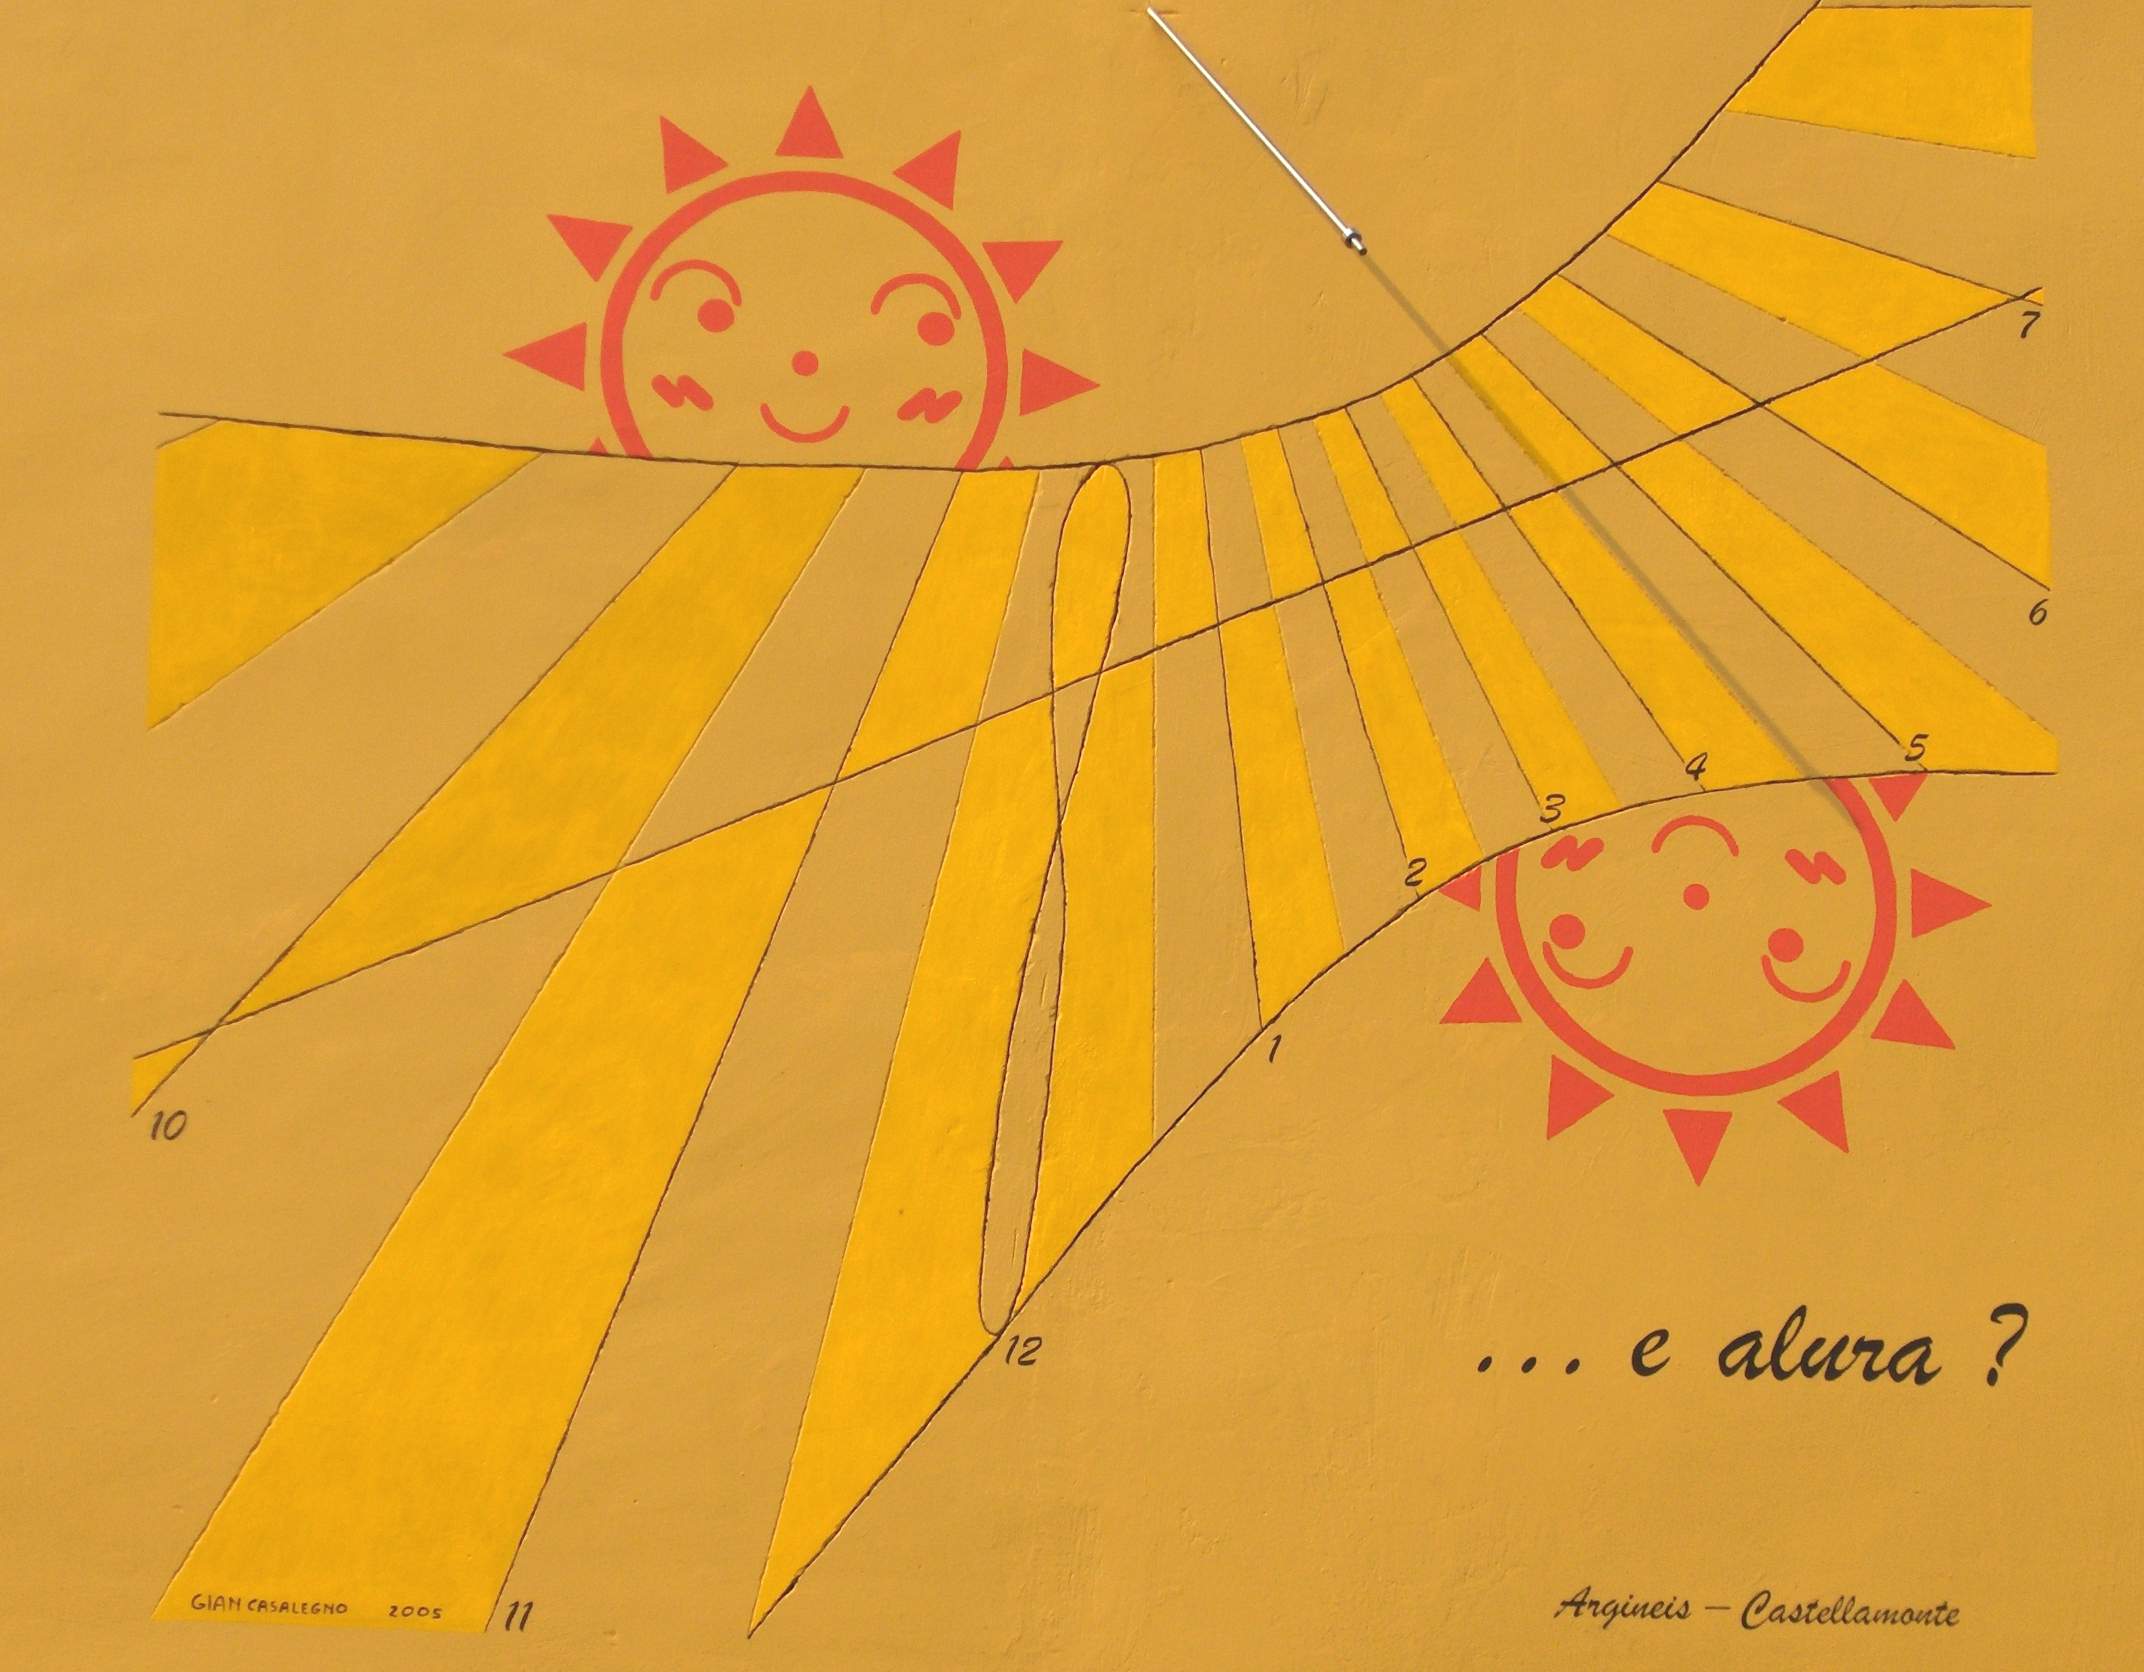 Sundial in S. Anna, Castellamonte - designed by Gian Casalegno